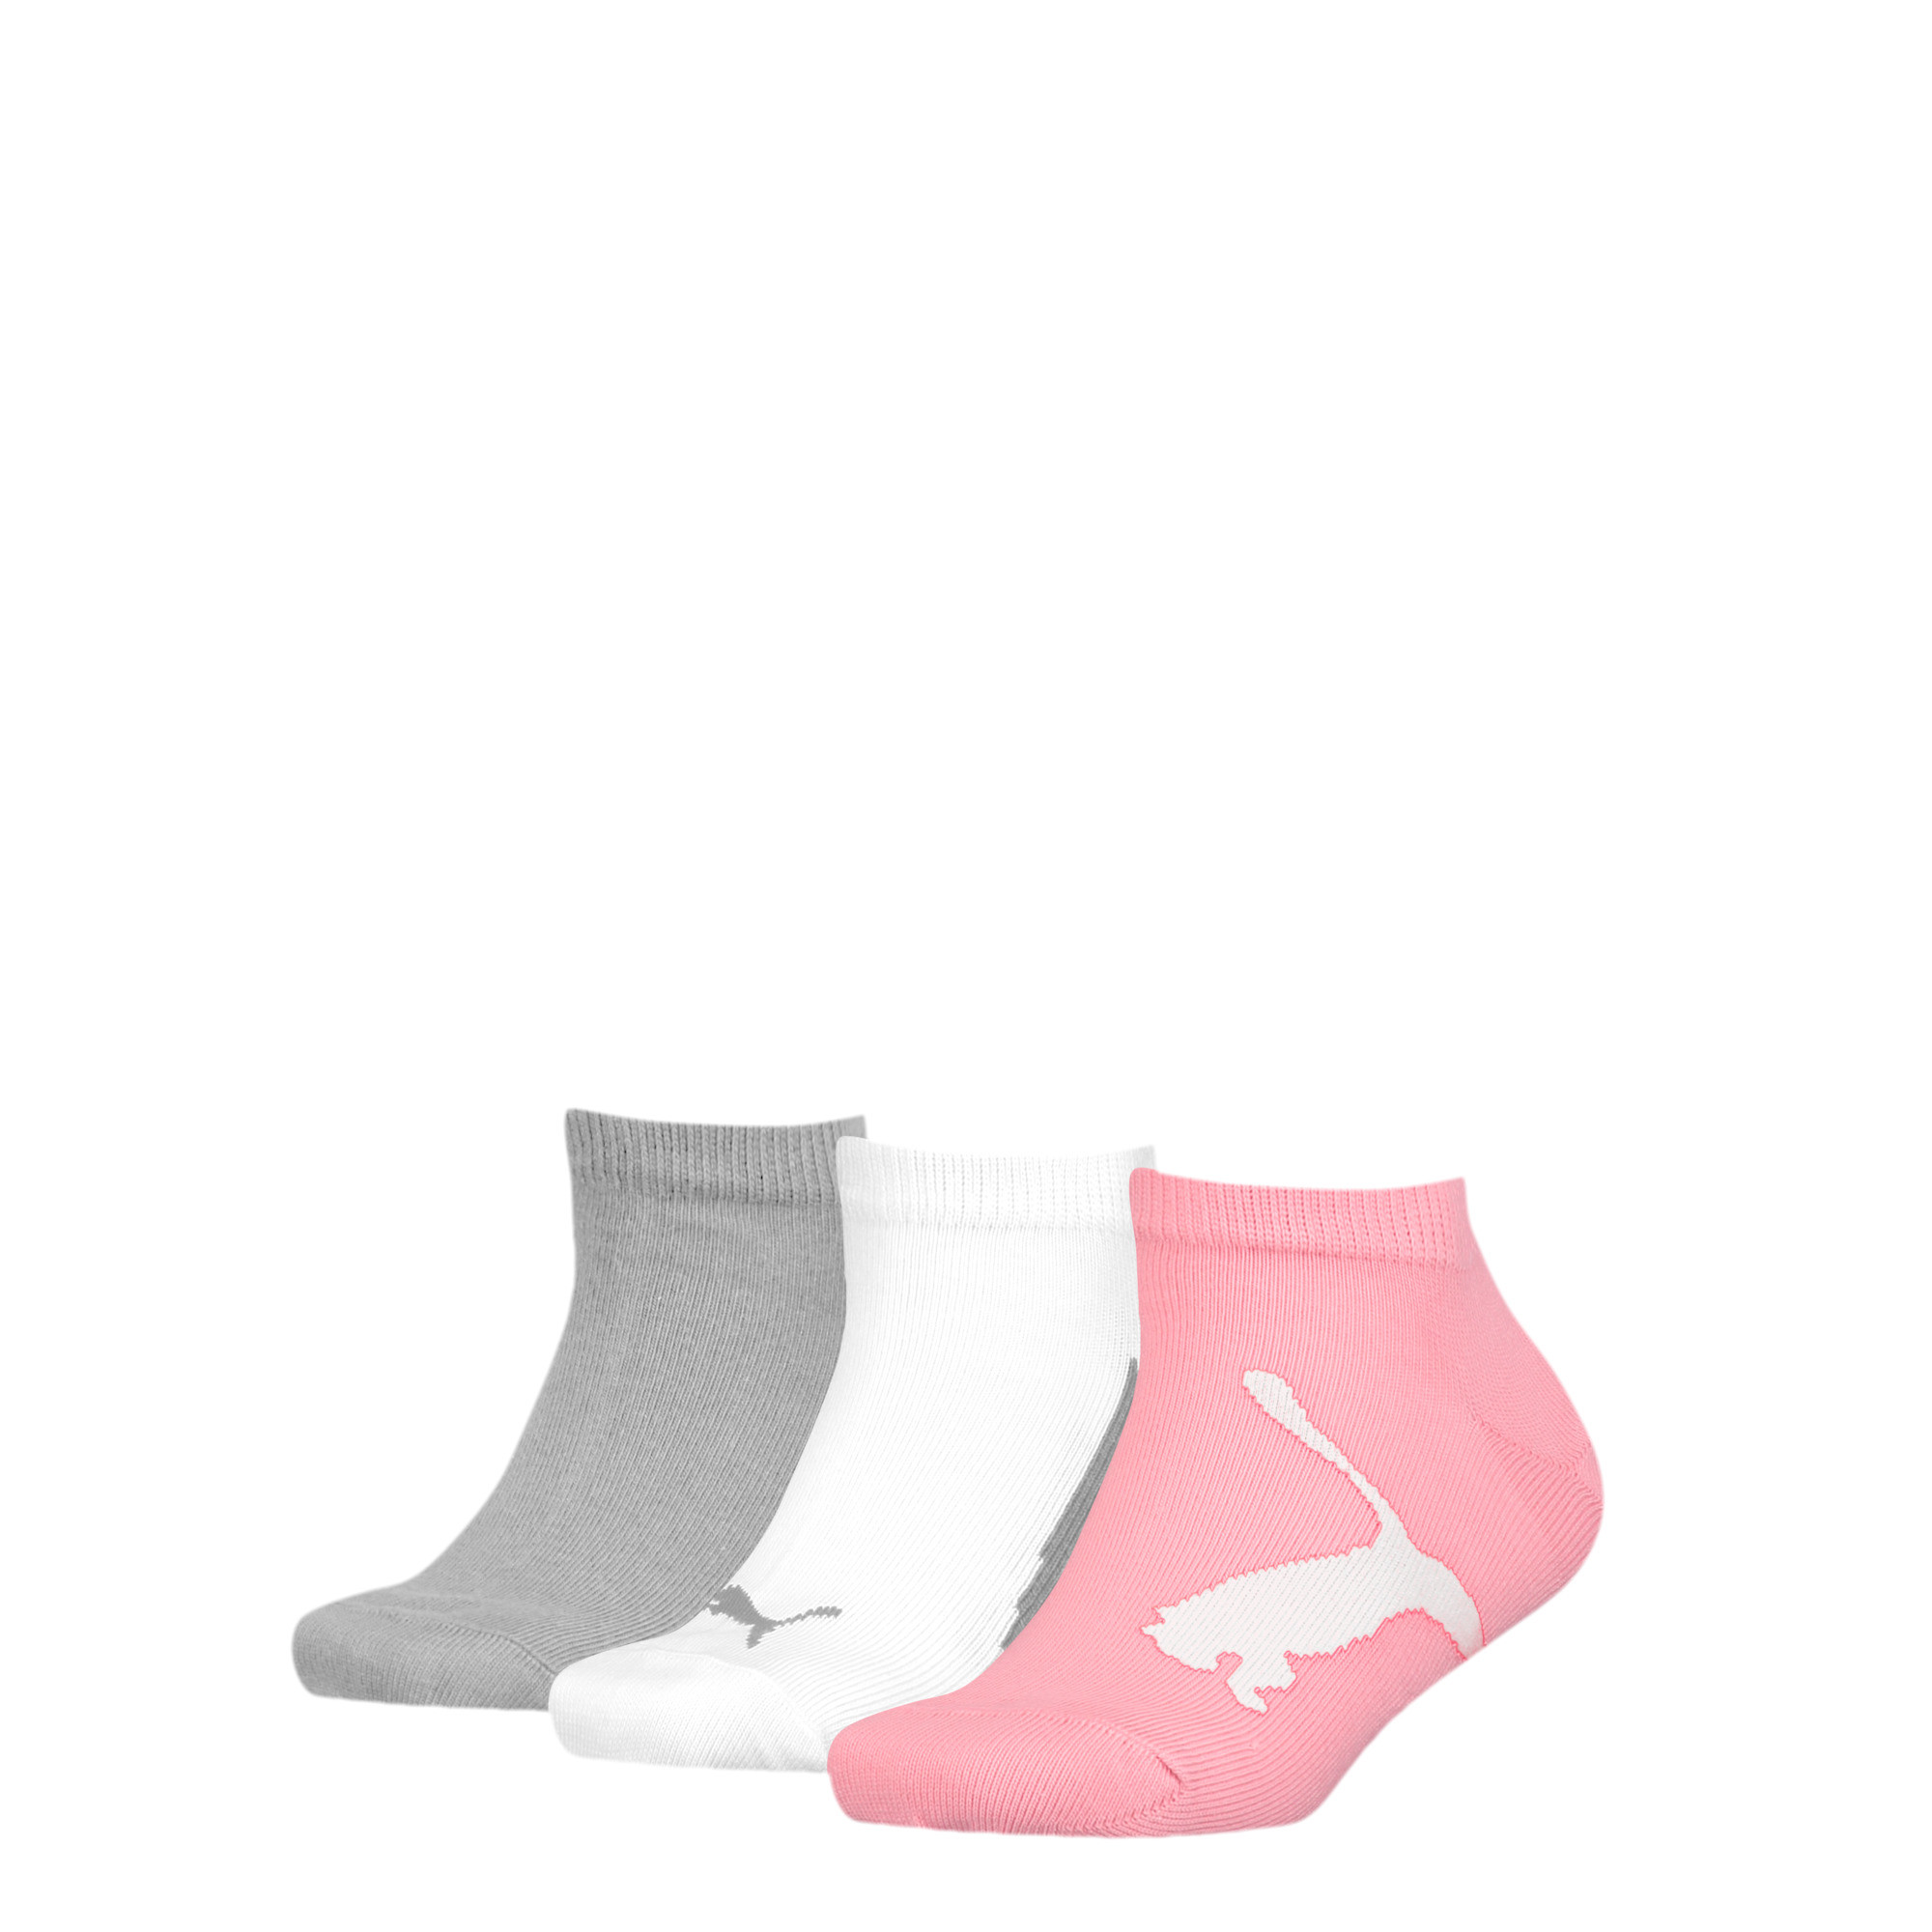 Kids' PUMA BWT Sneaker - Trainer Socks 3 Pack In Pink/Grey, Size 31-34